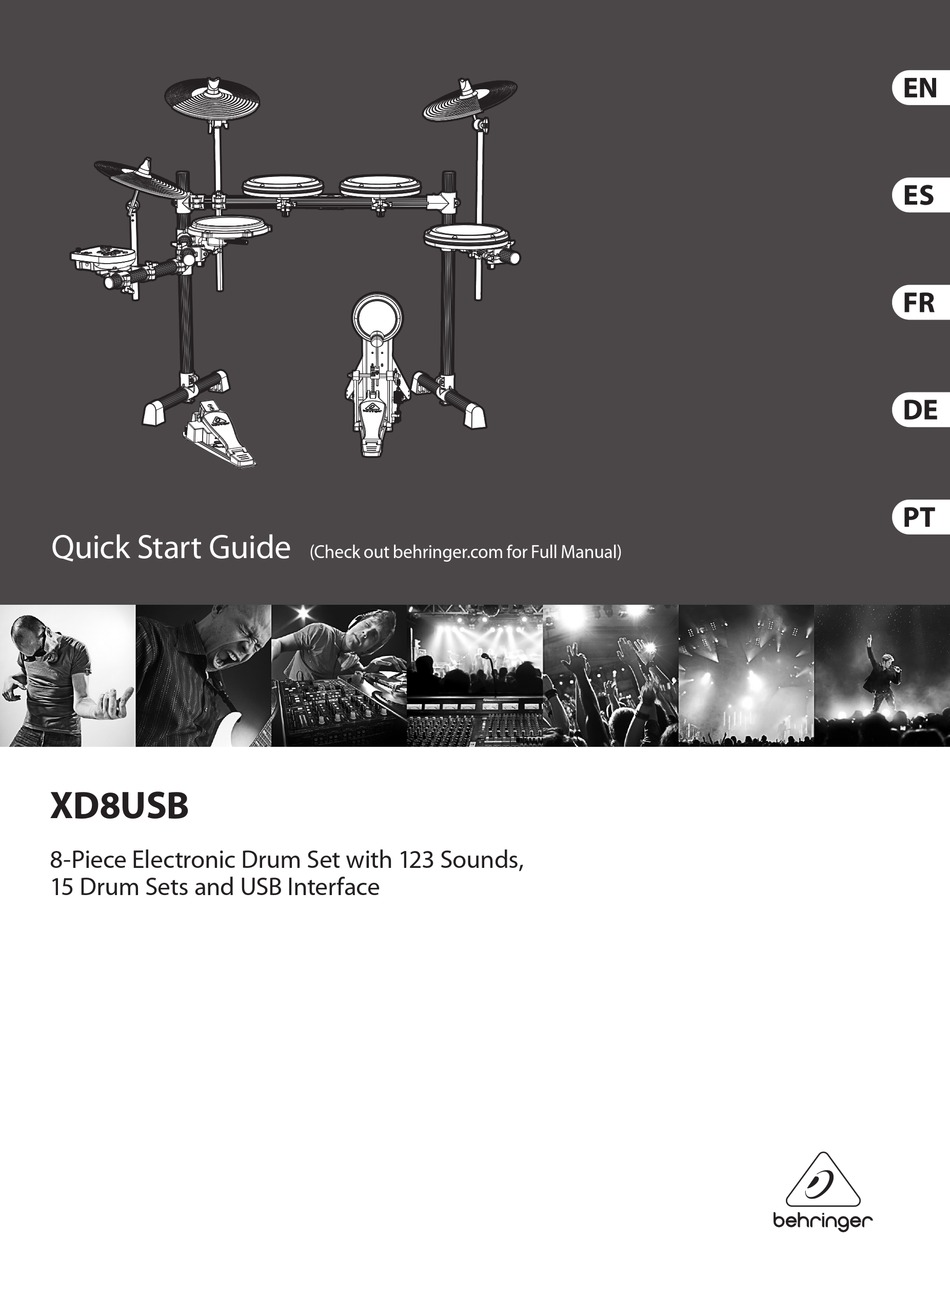 BEHRINGER XD8USB QUICK START MANUAL Pdf Download | ManualsLib